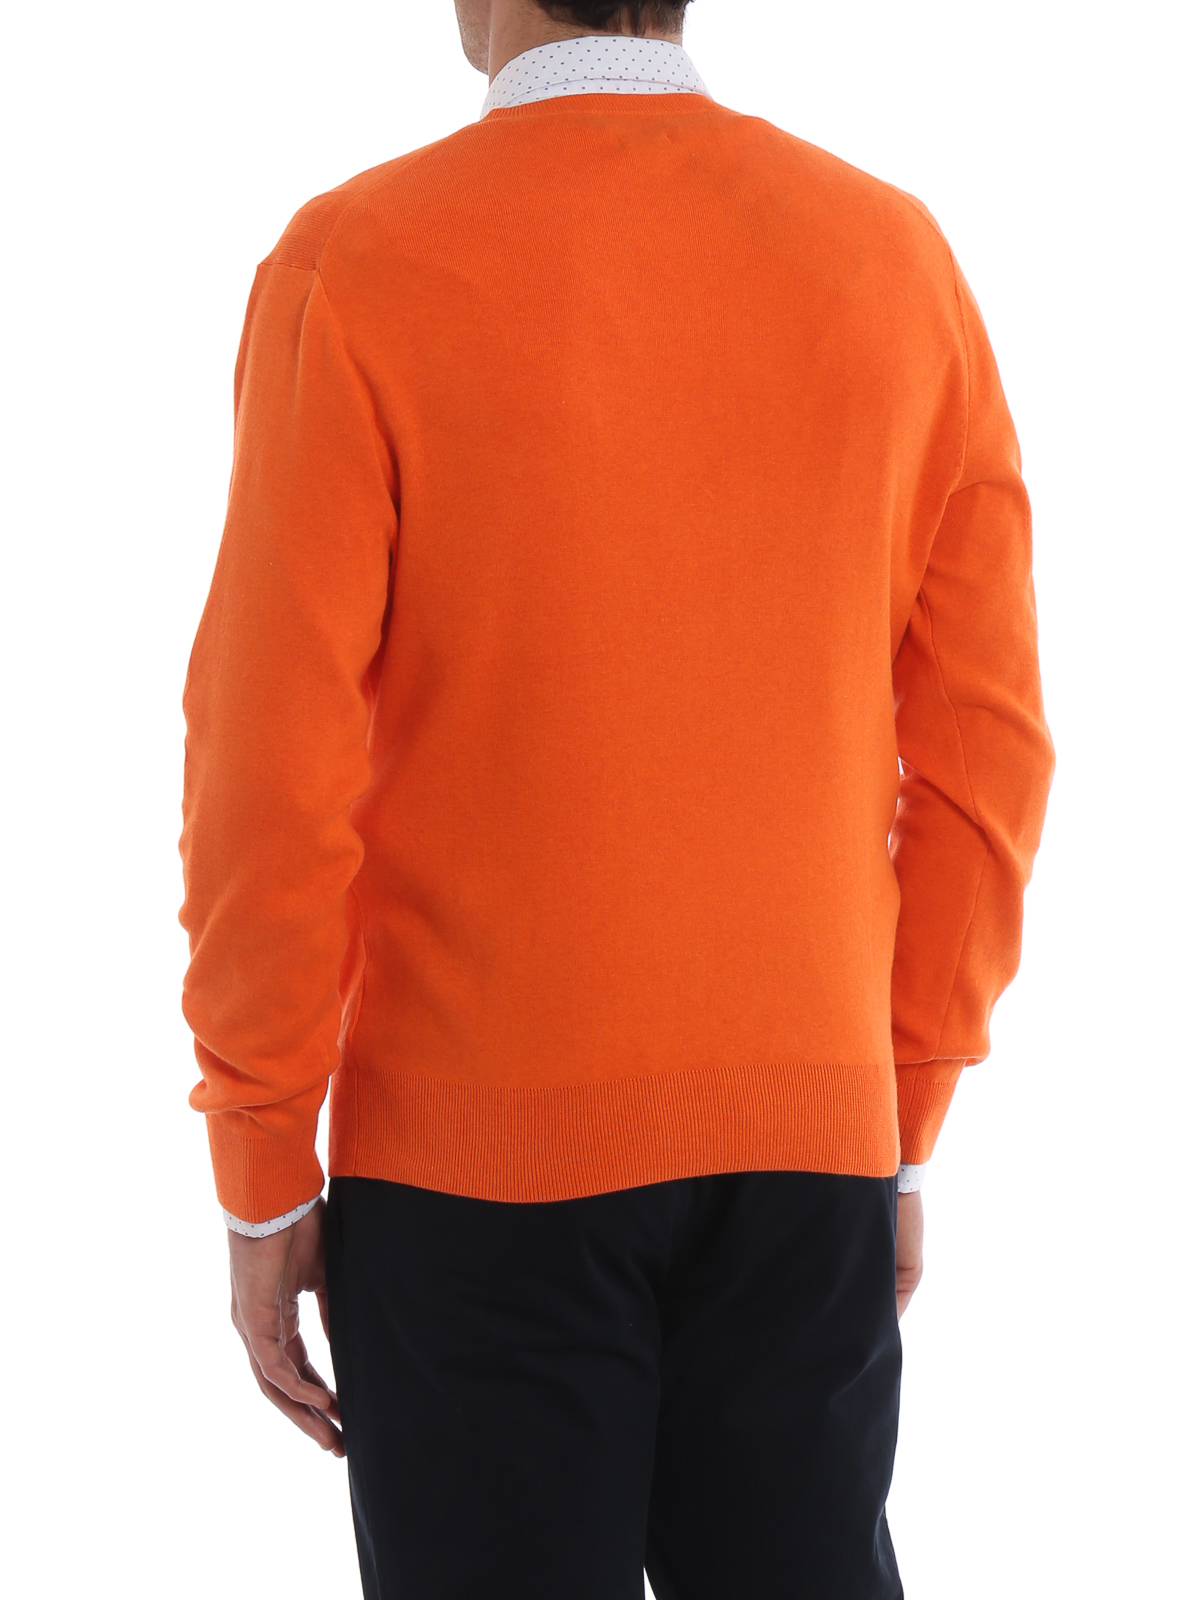 fit necks V V-neck - sweater - Slim A40S4602C4782 cotton Ralph Lauren Polo orange